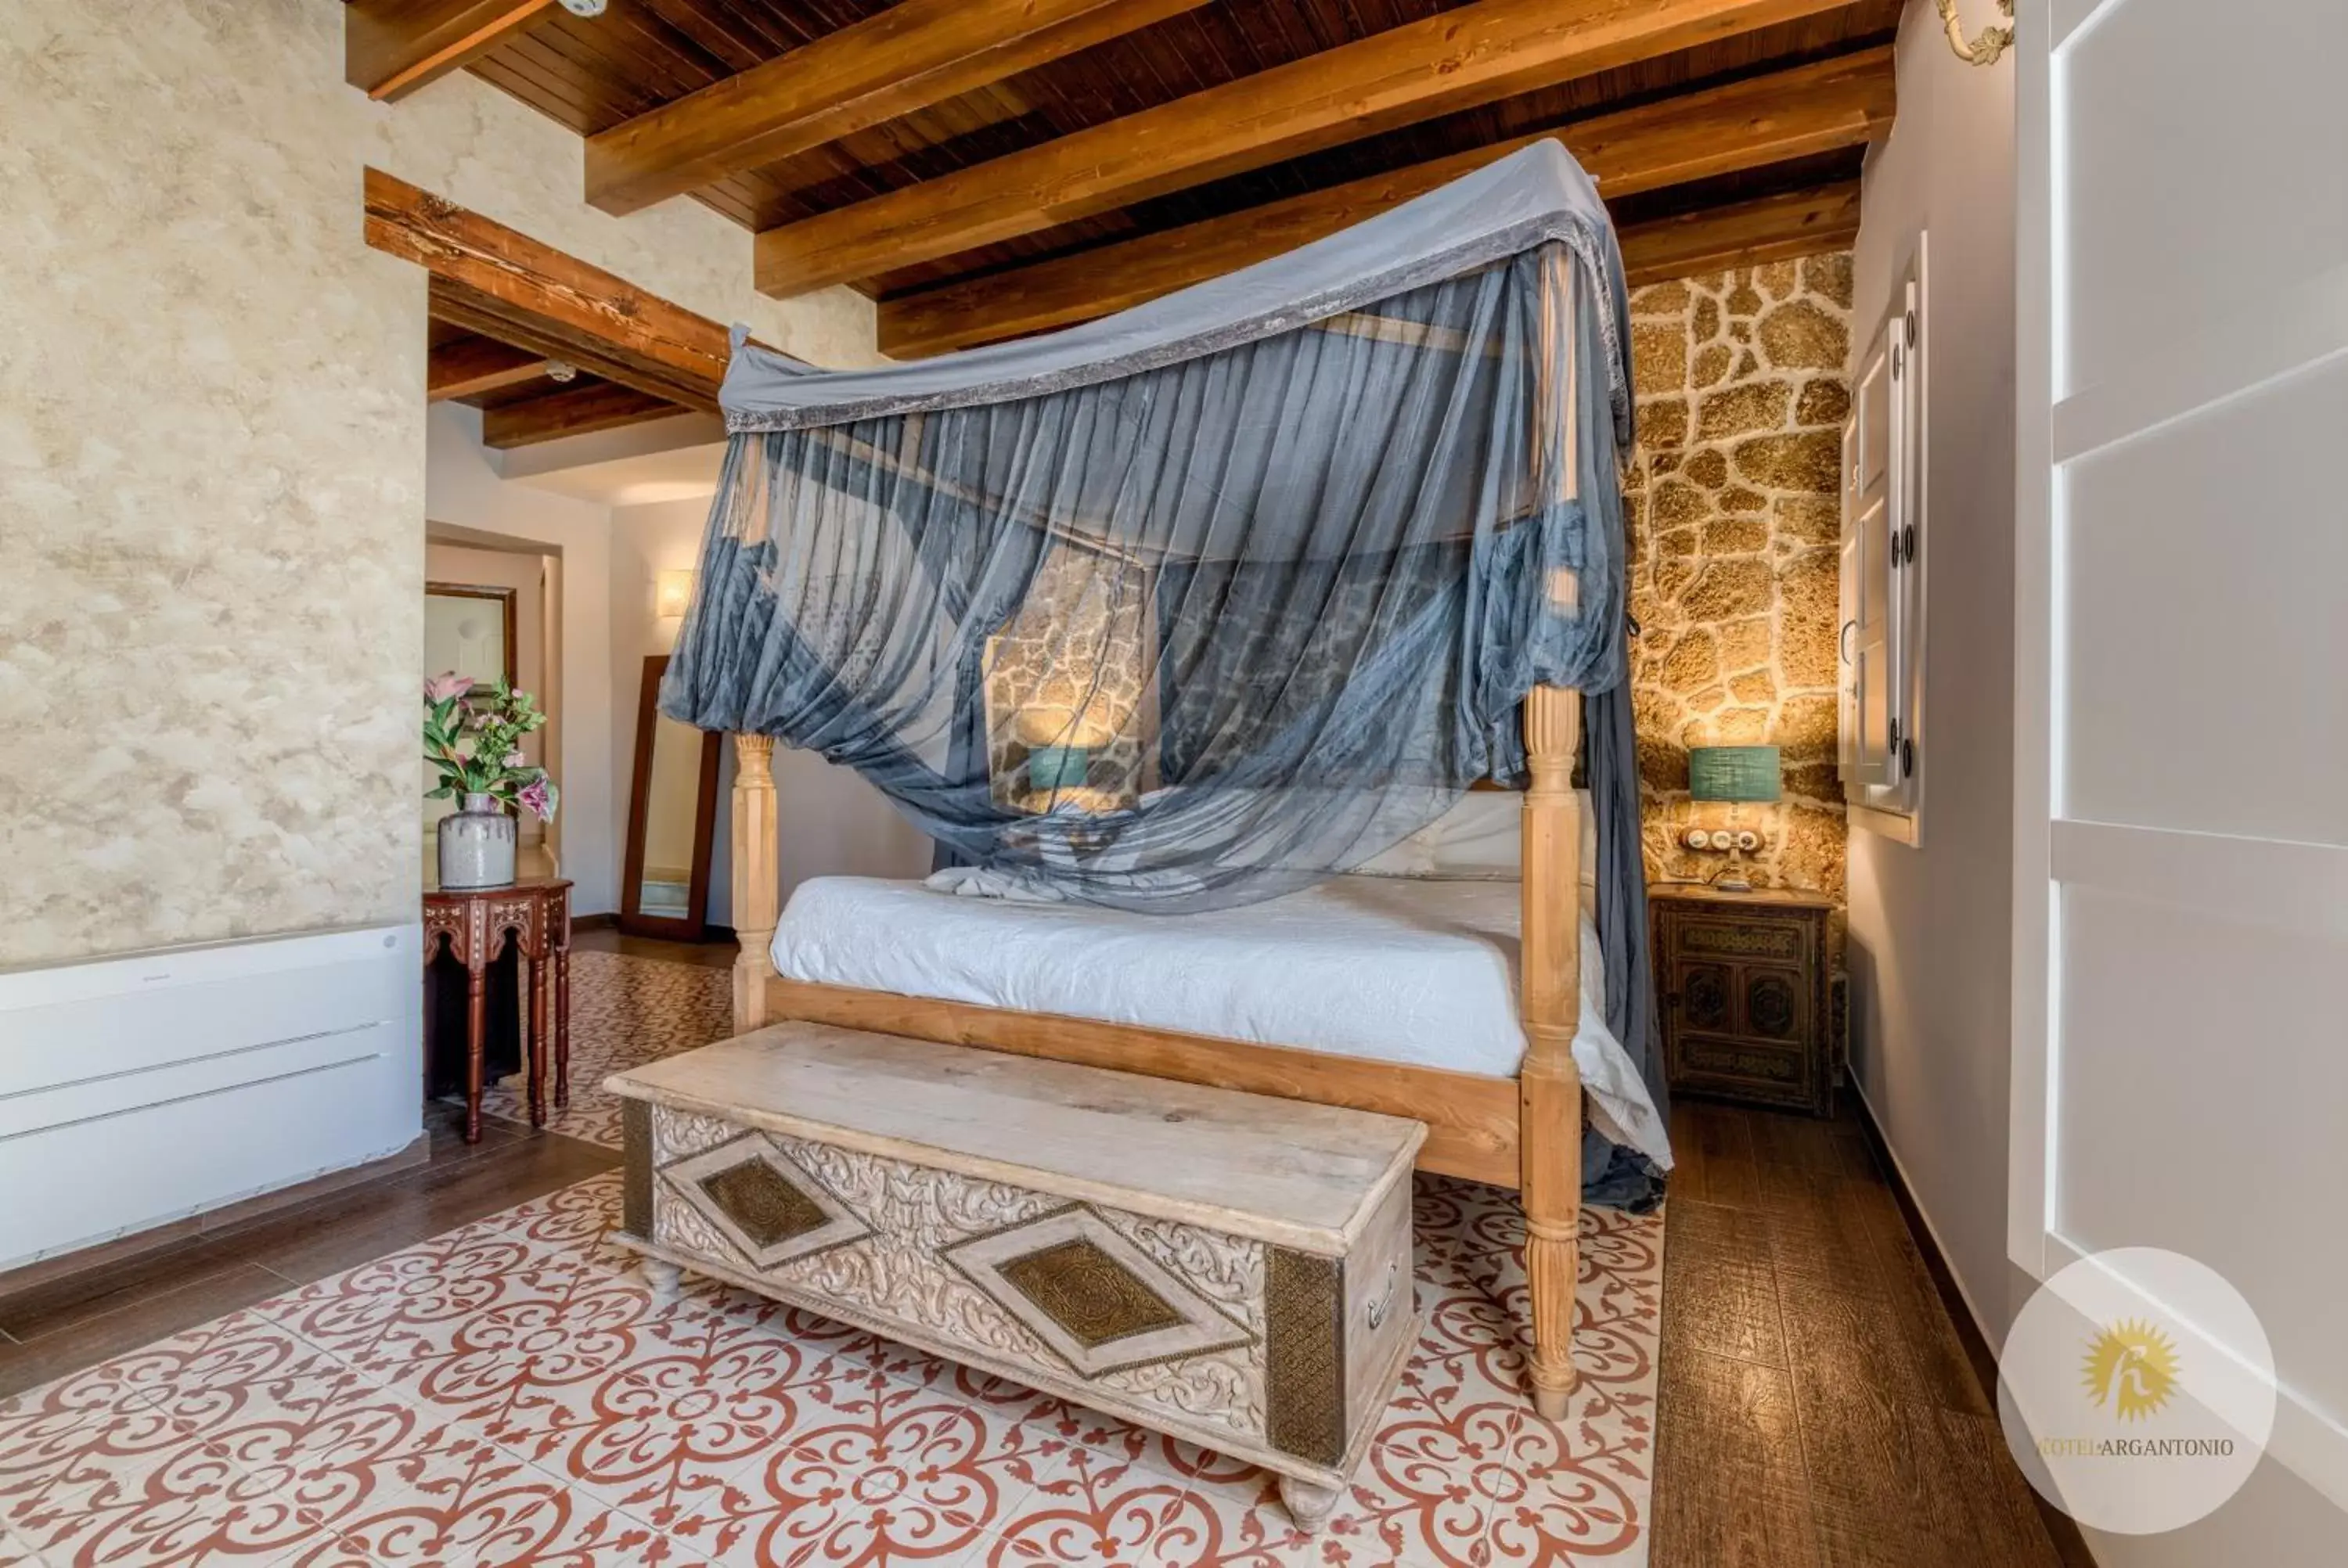 Bed in Hotel Argantonio